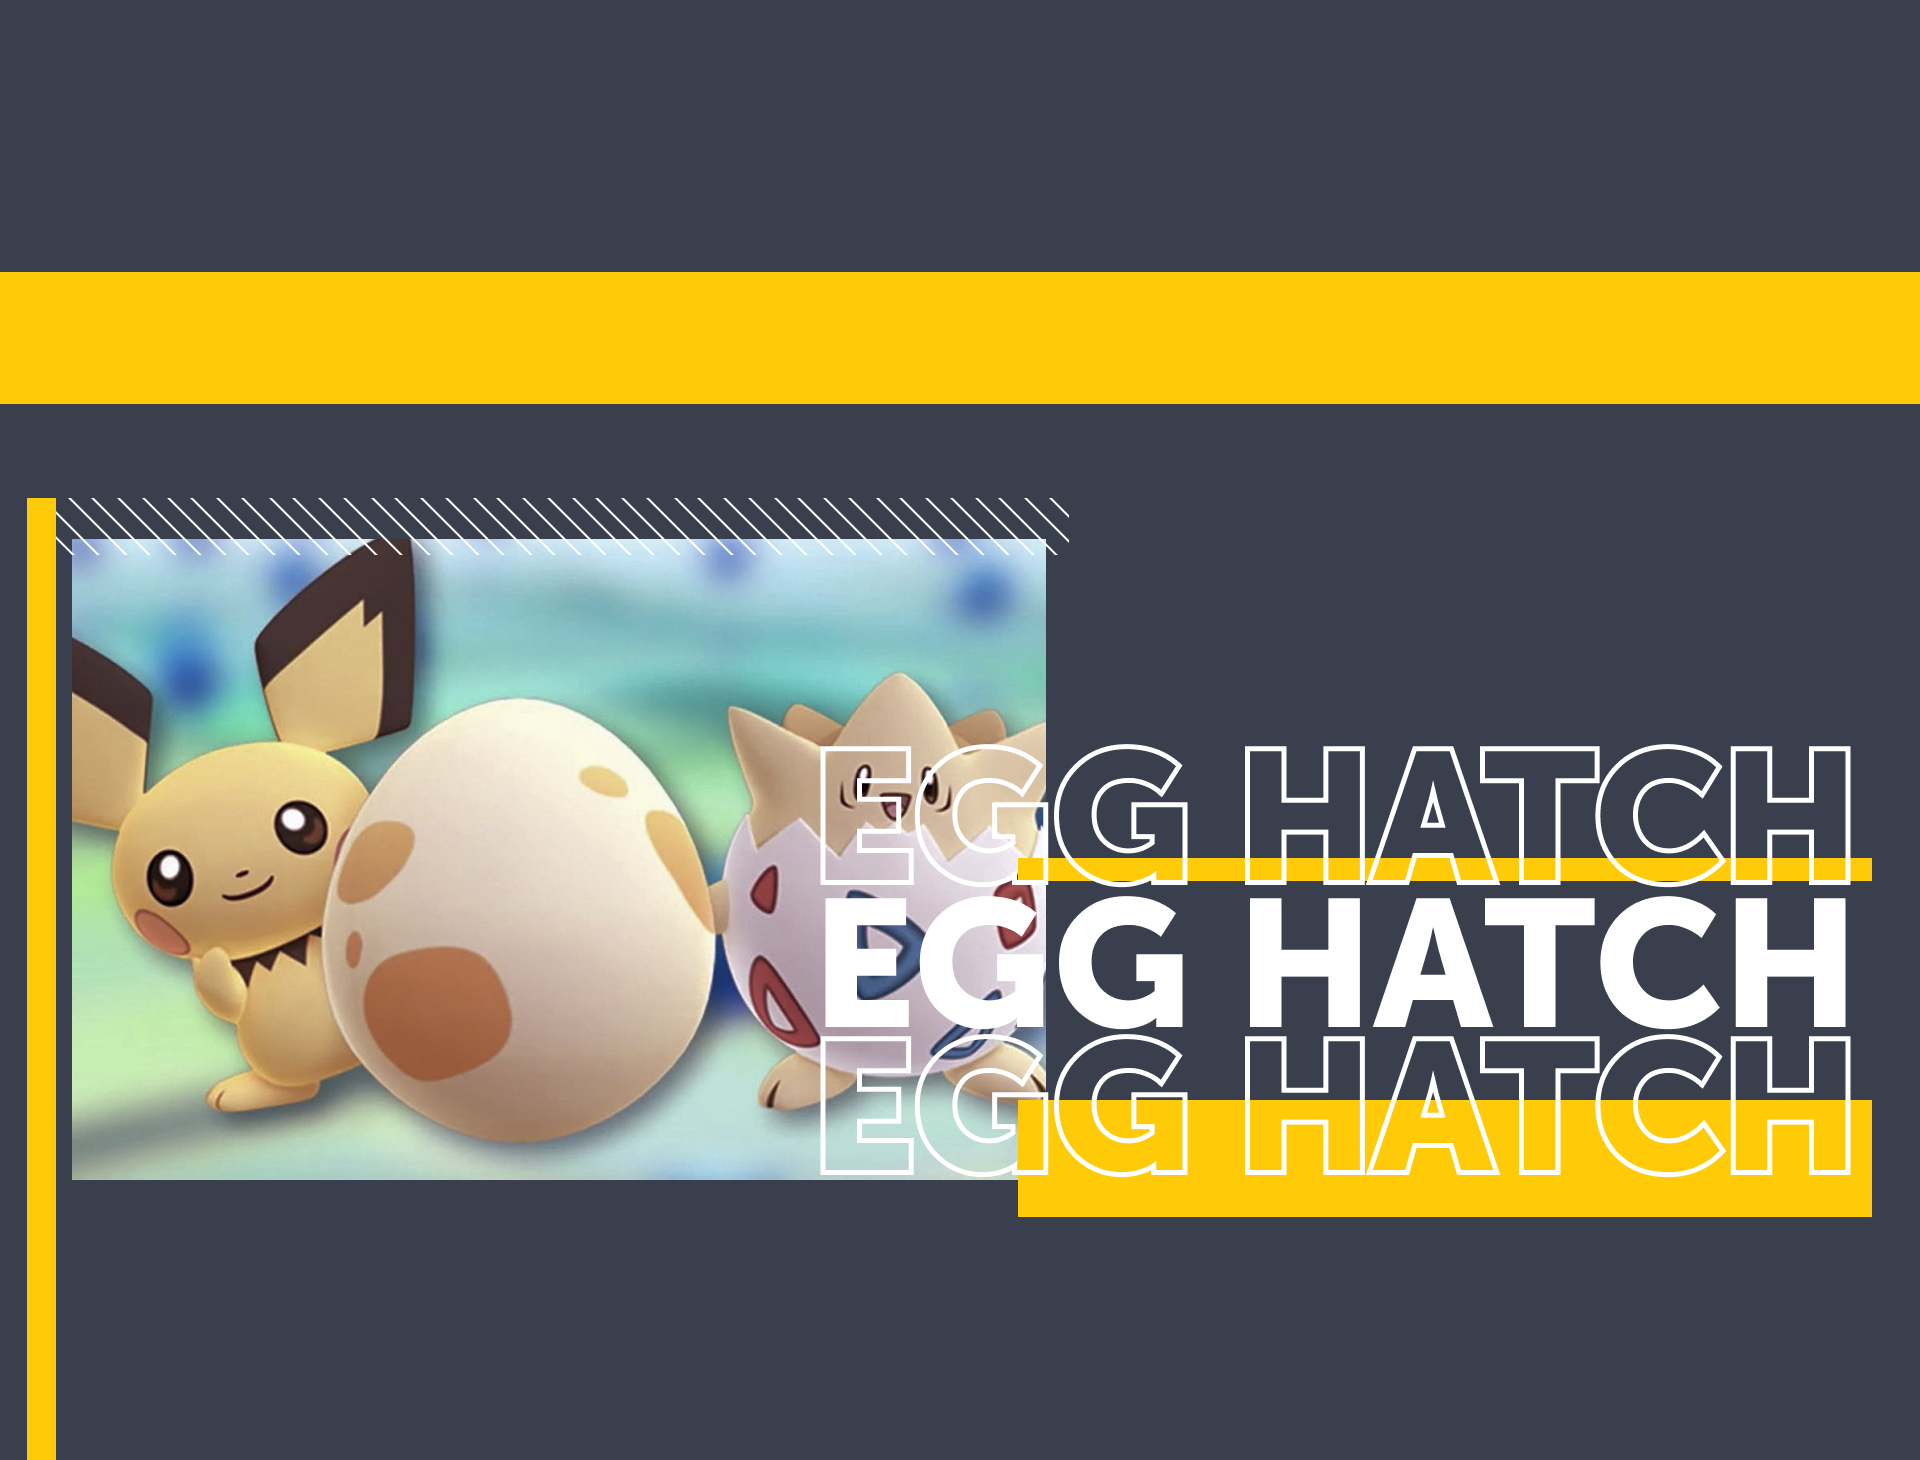 Egg Hatch - Walking